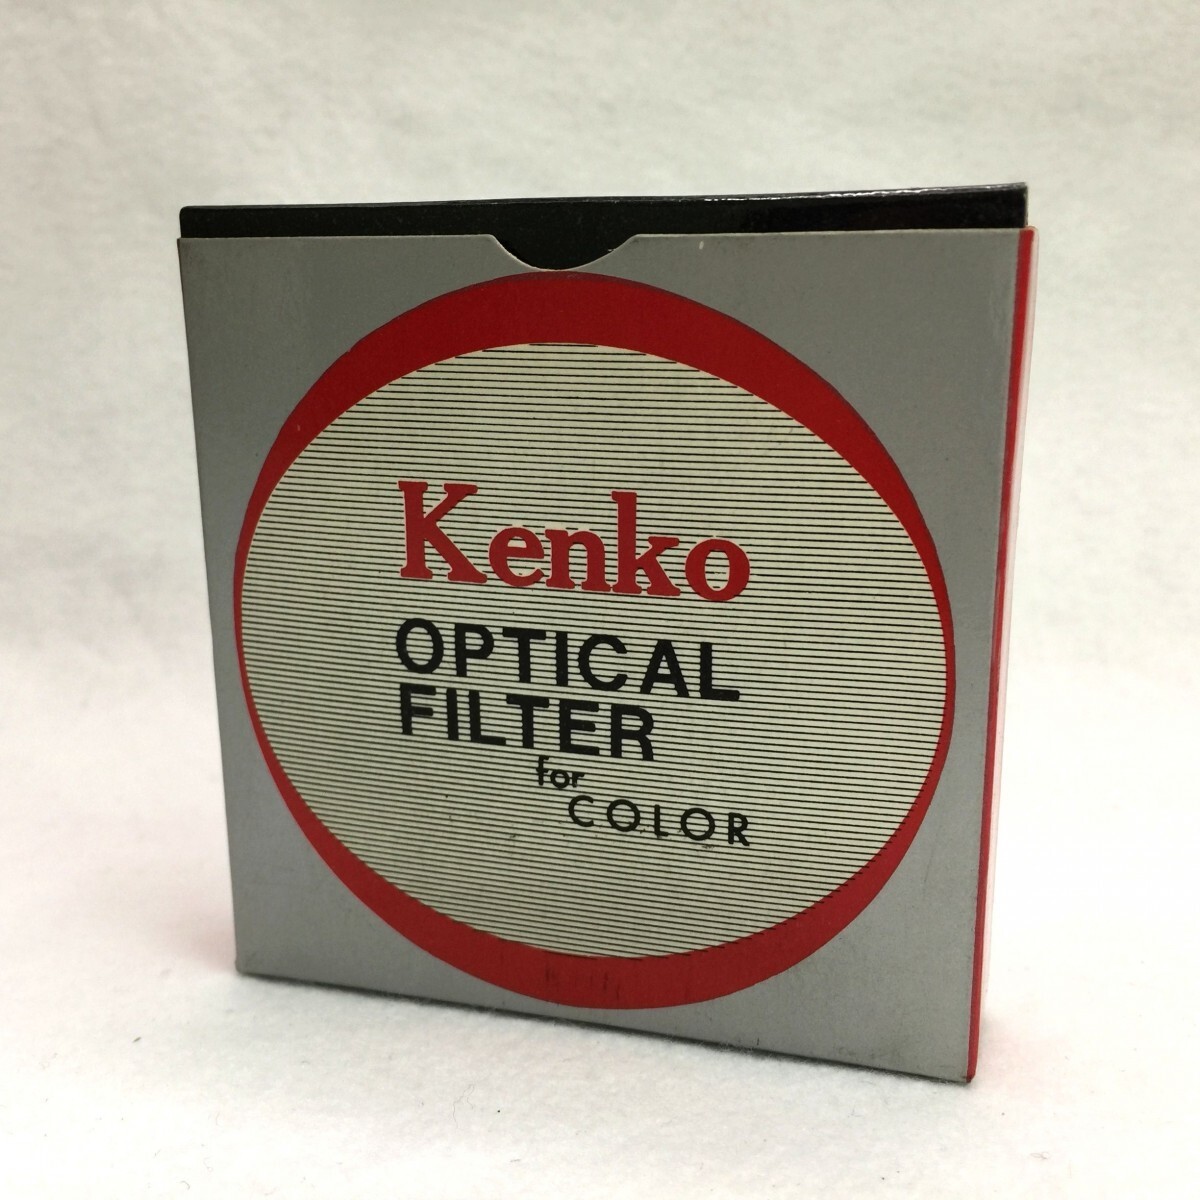 Kenko OPTICAL FILTER for COLOR W4 ケンコー 55mm径 色温度変換フィルター フィルムカメラ用 曇天時 外箱・説明書付 現状品 ／ 03-00529_画像6